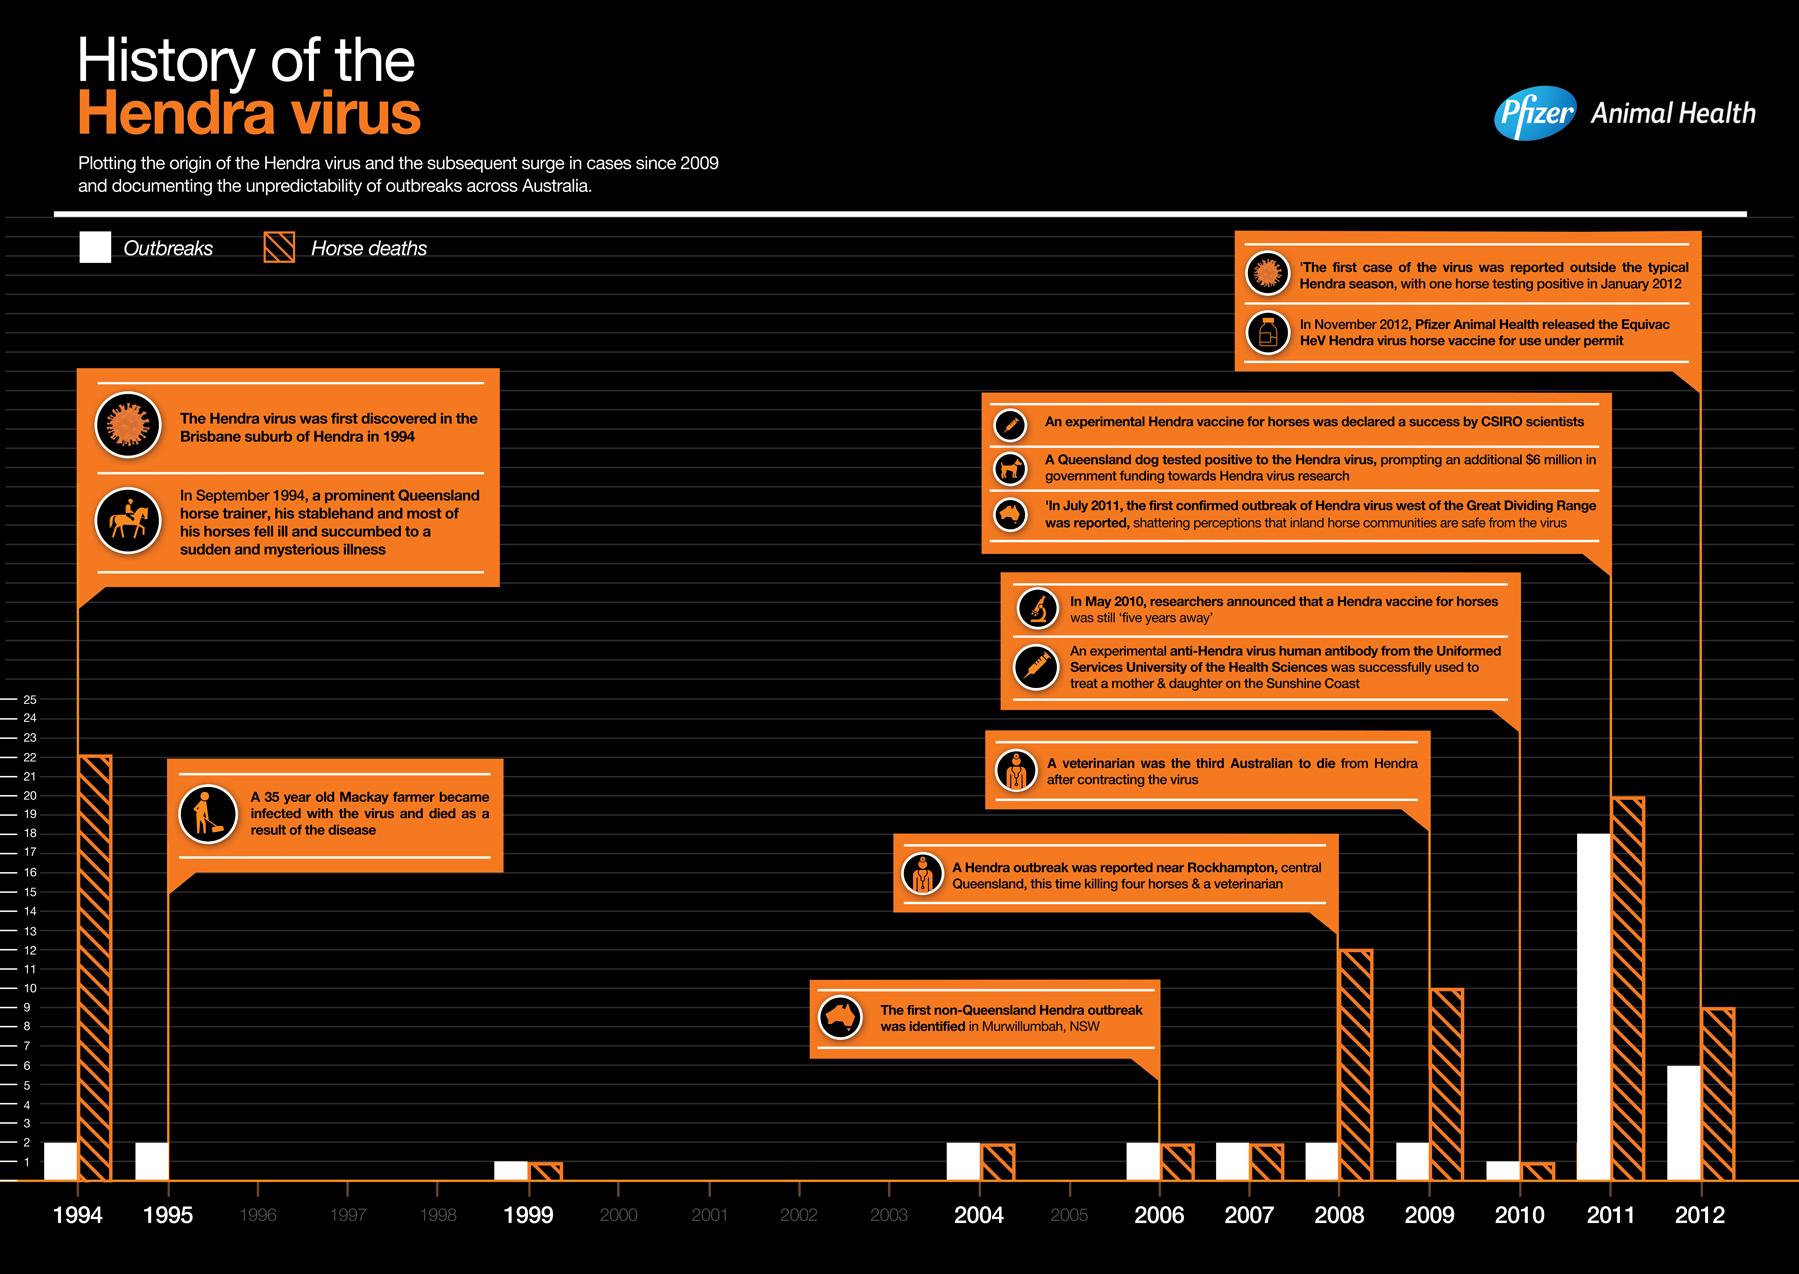 Infographic of explaining the history of the Hendra virus